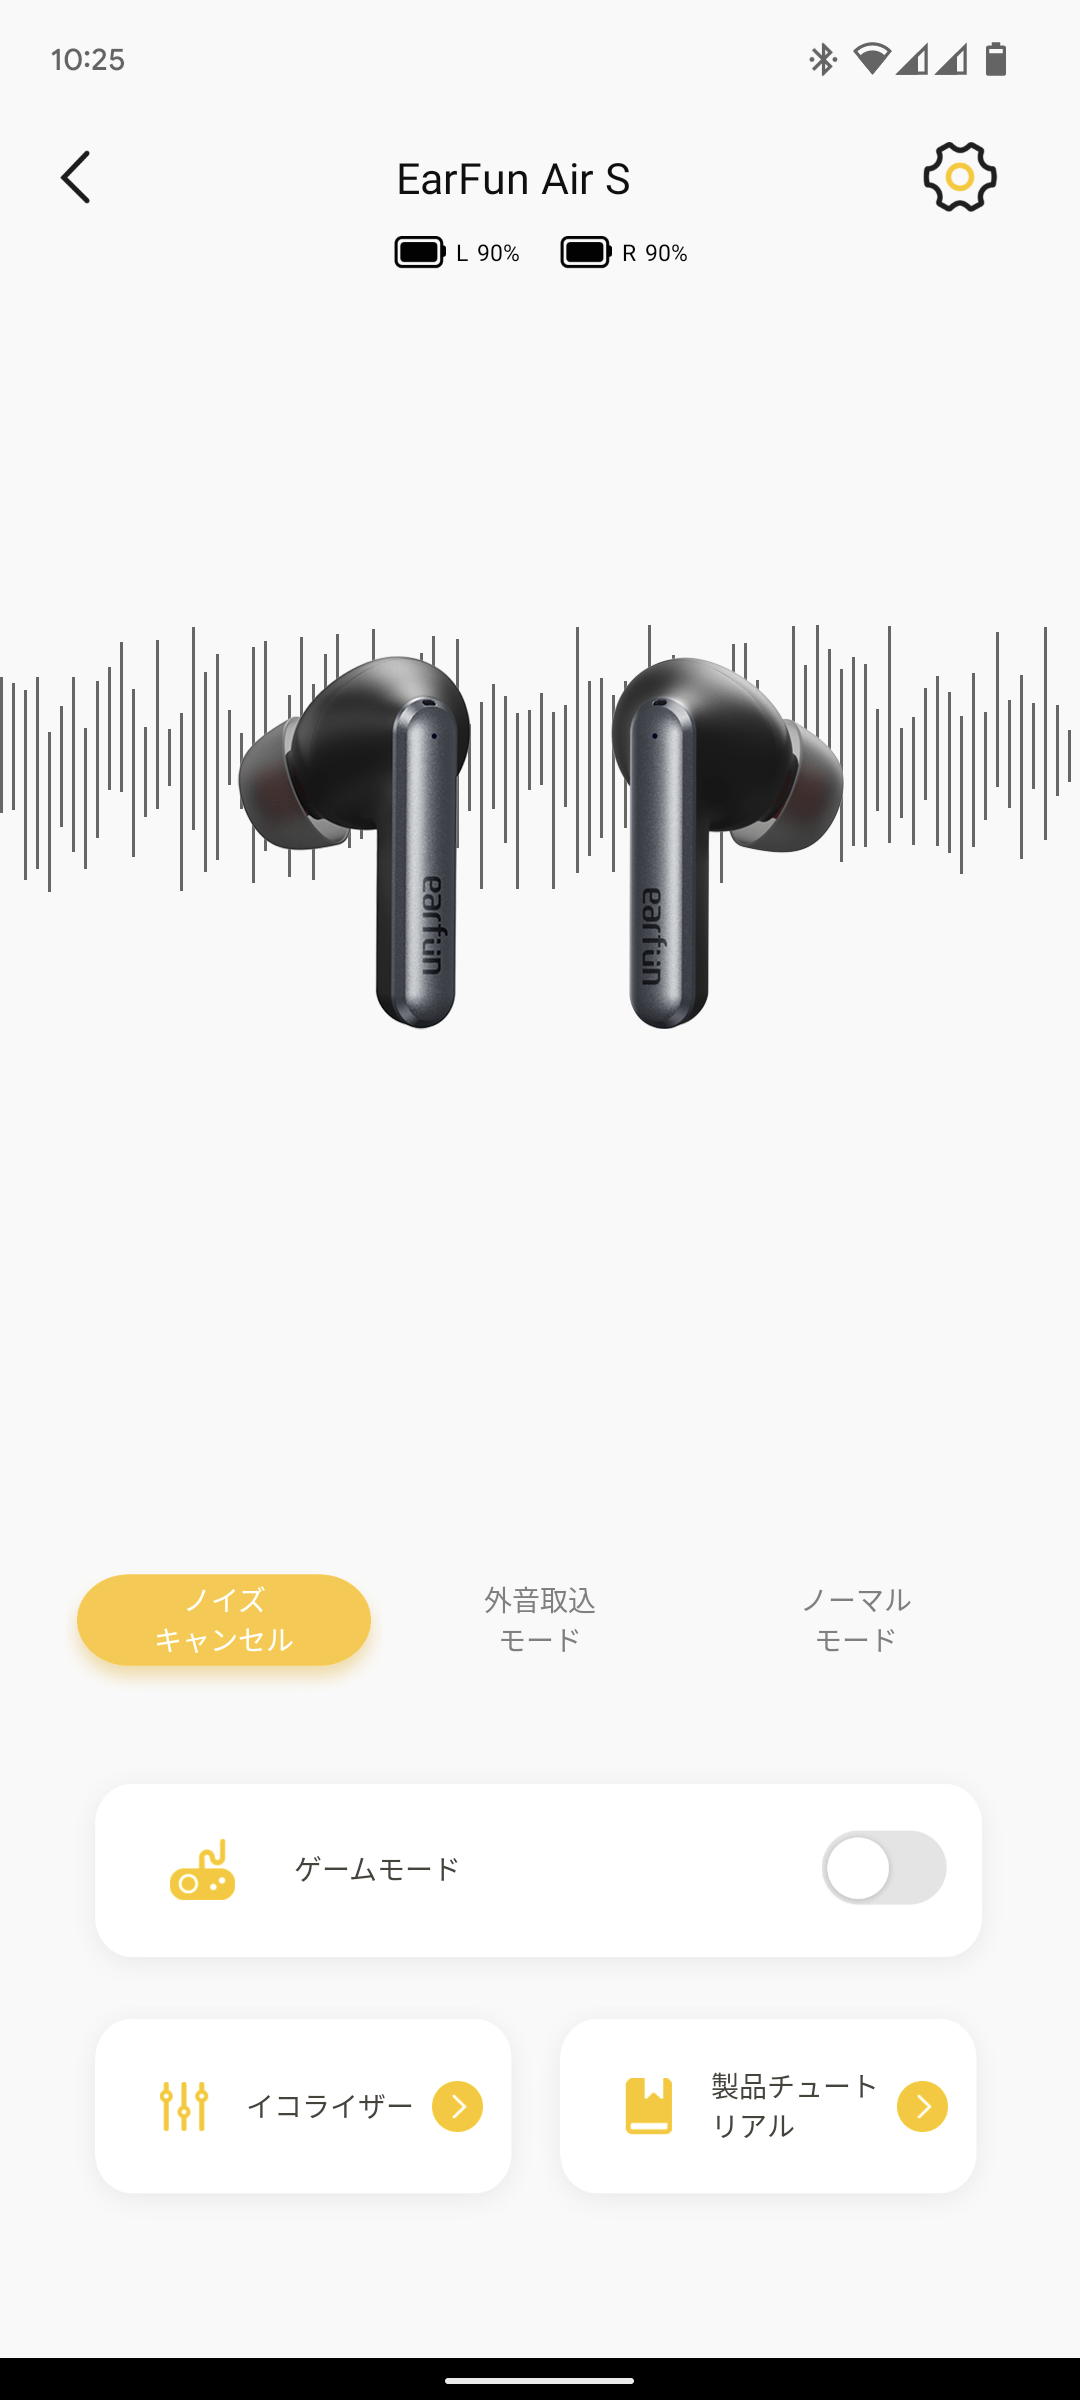 EarFun Air S 完全ワイヤレスイヤホン レビュー 専用アプリ ホーム画面